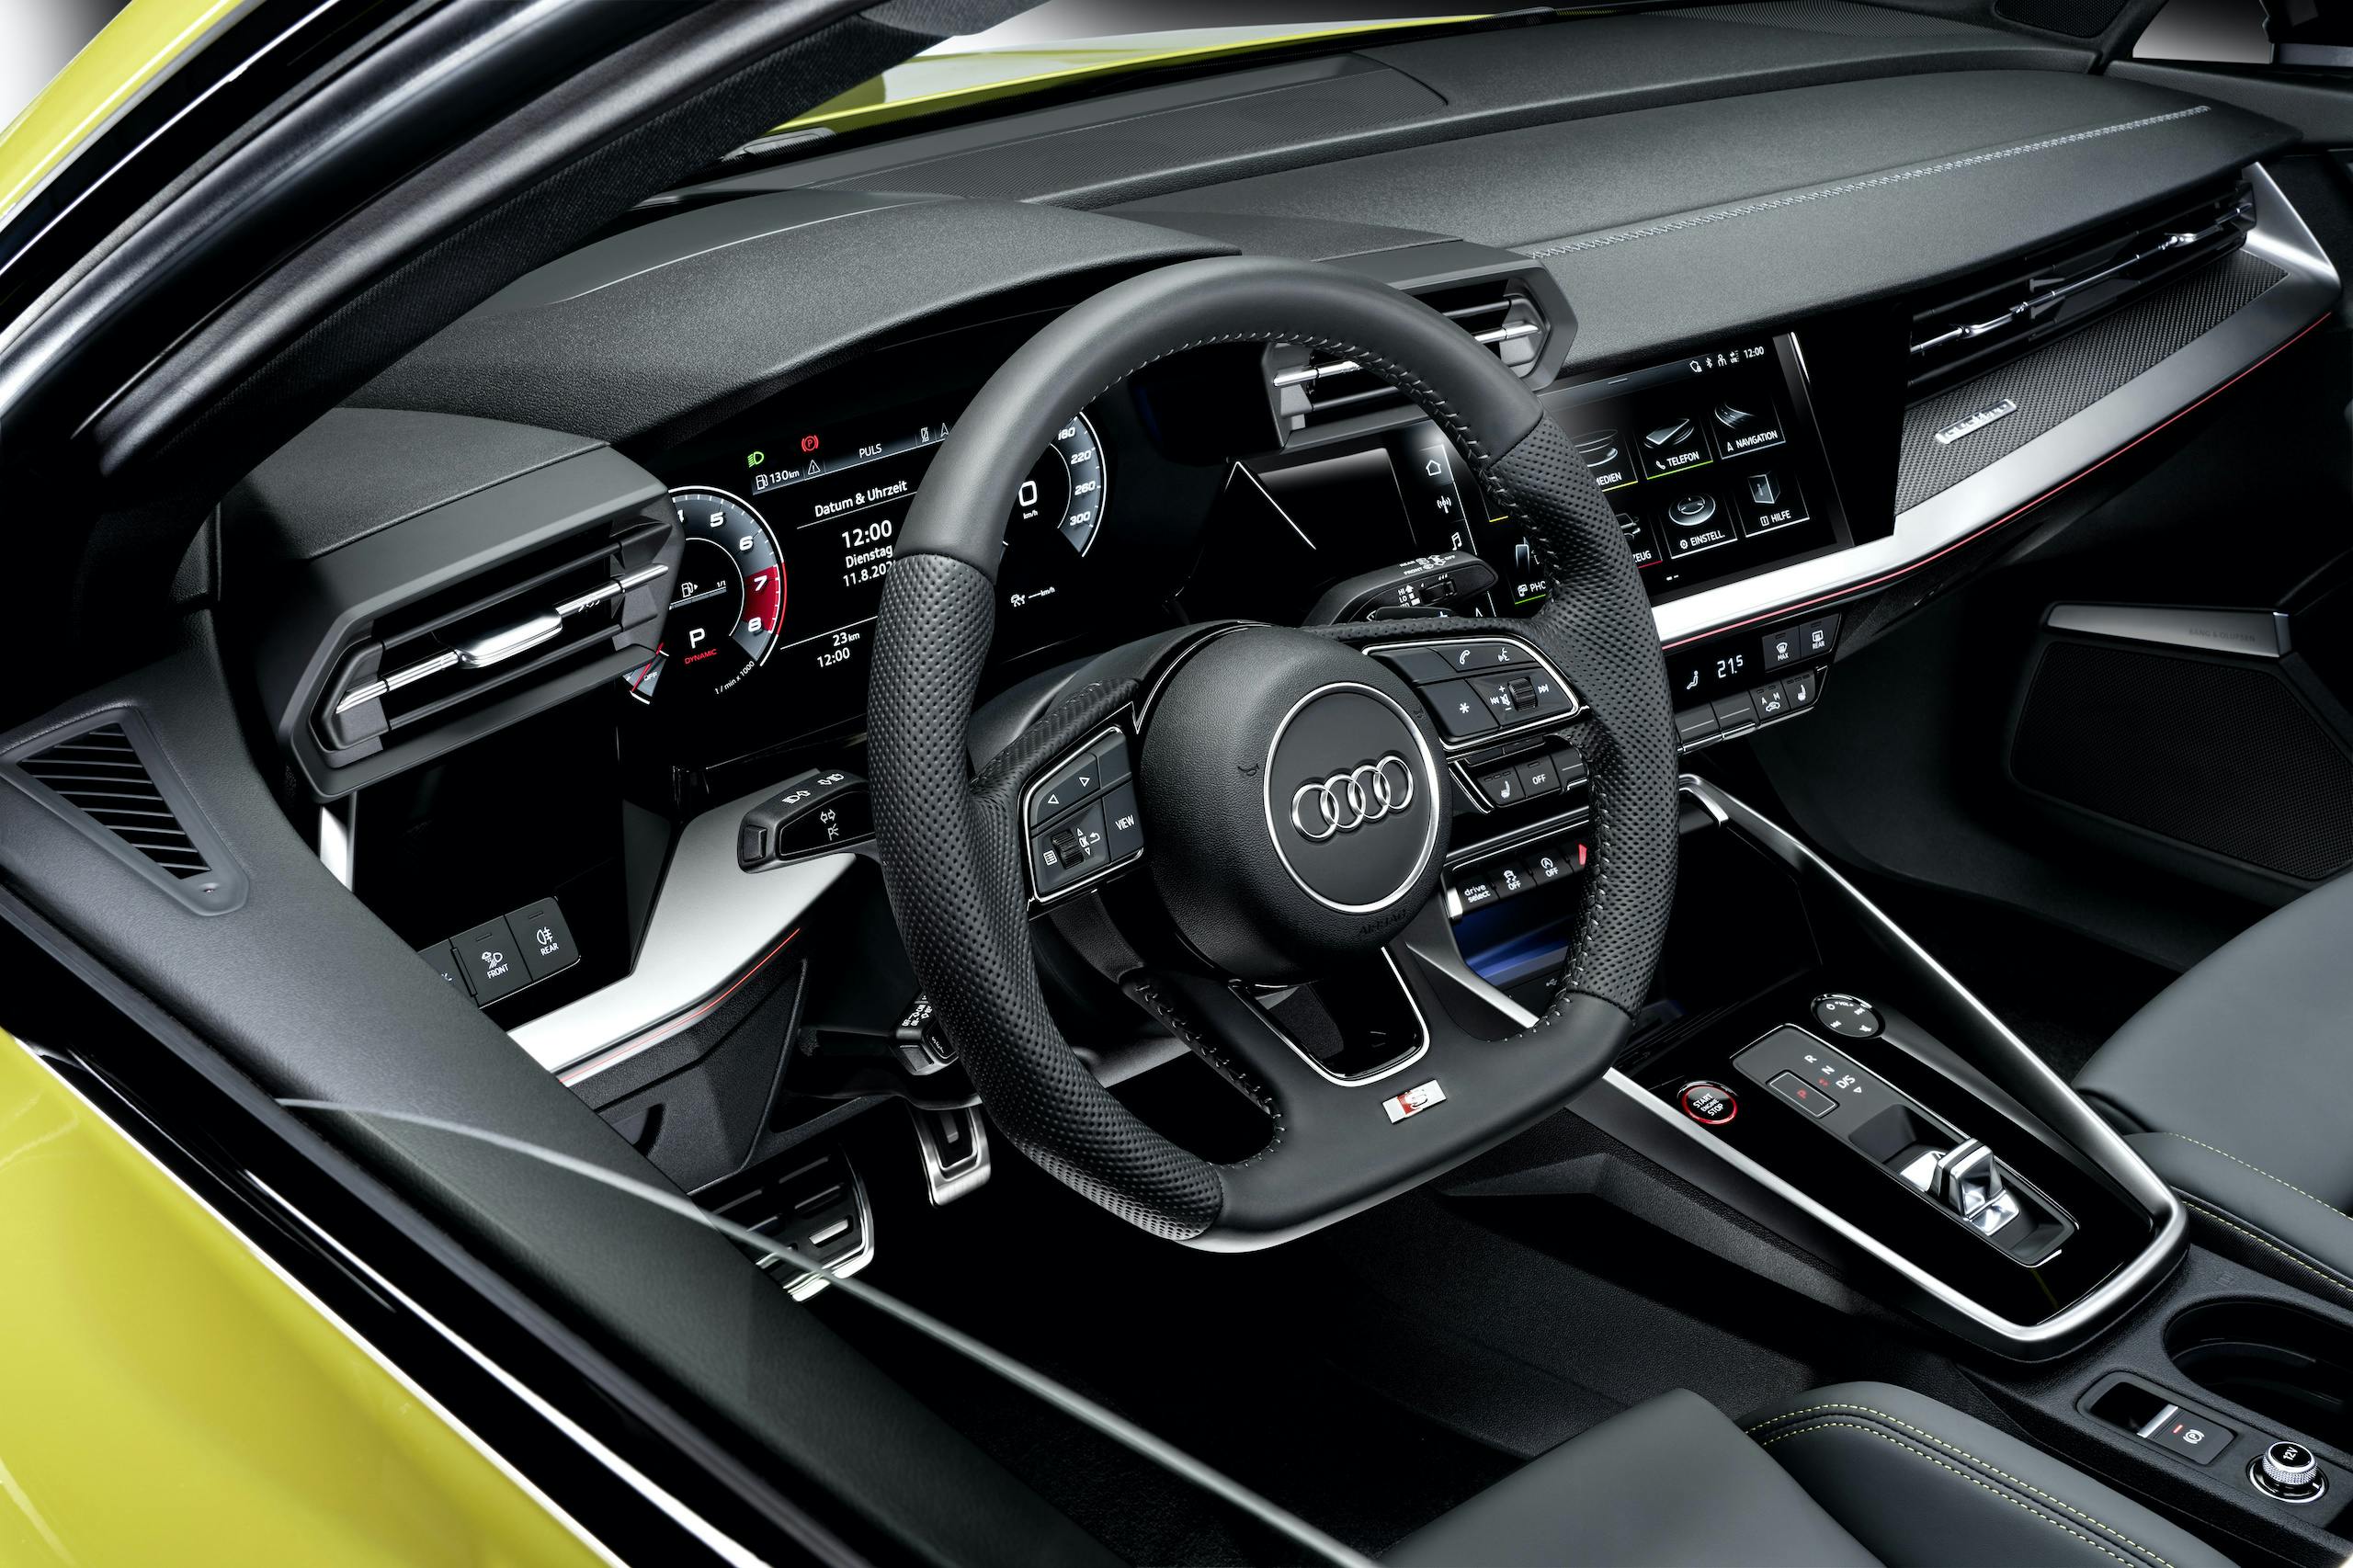 Audi S3 Sportback python yellow black leather interior front angle